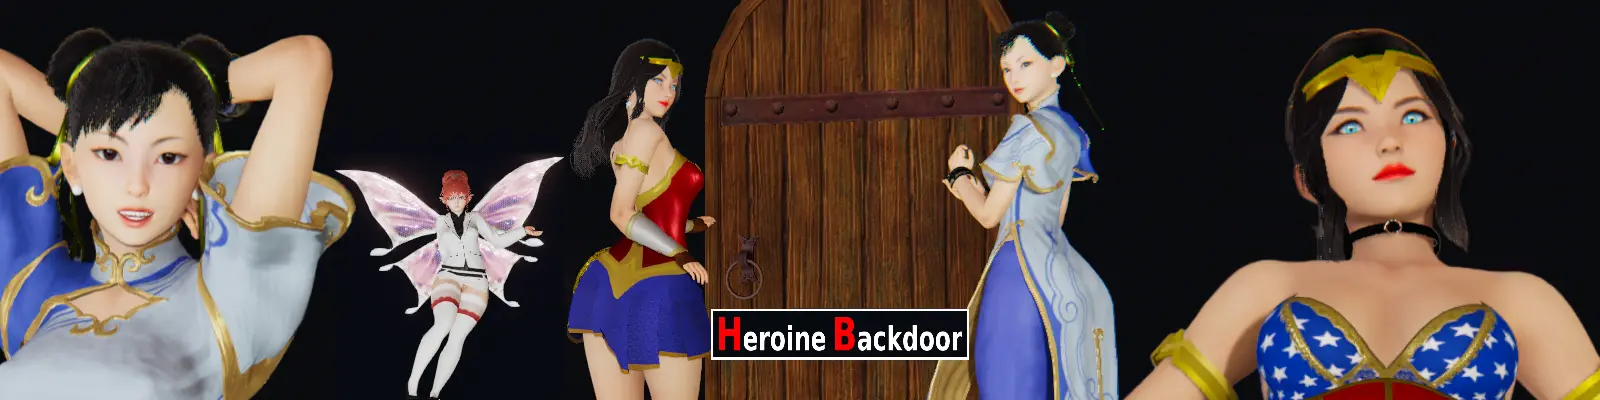 Heroine Backdoor main image